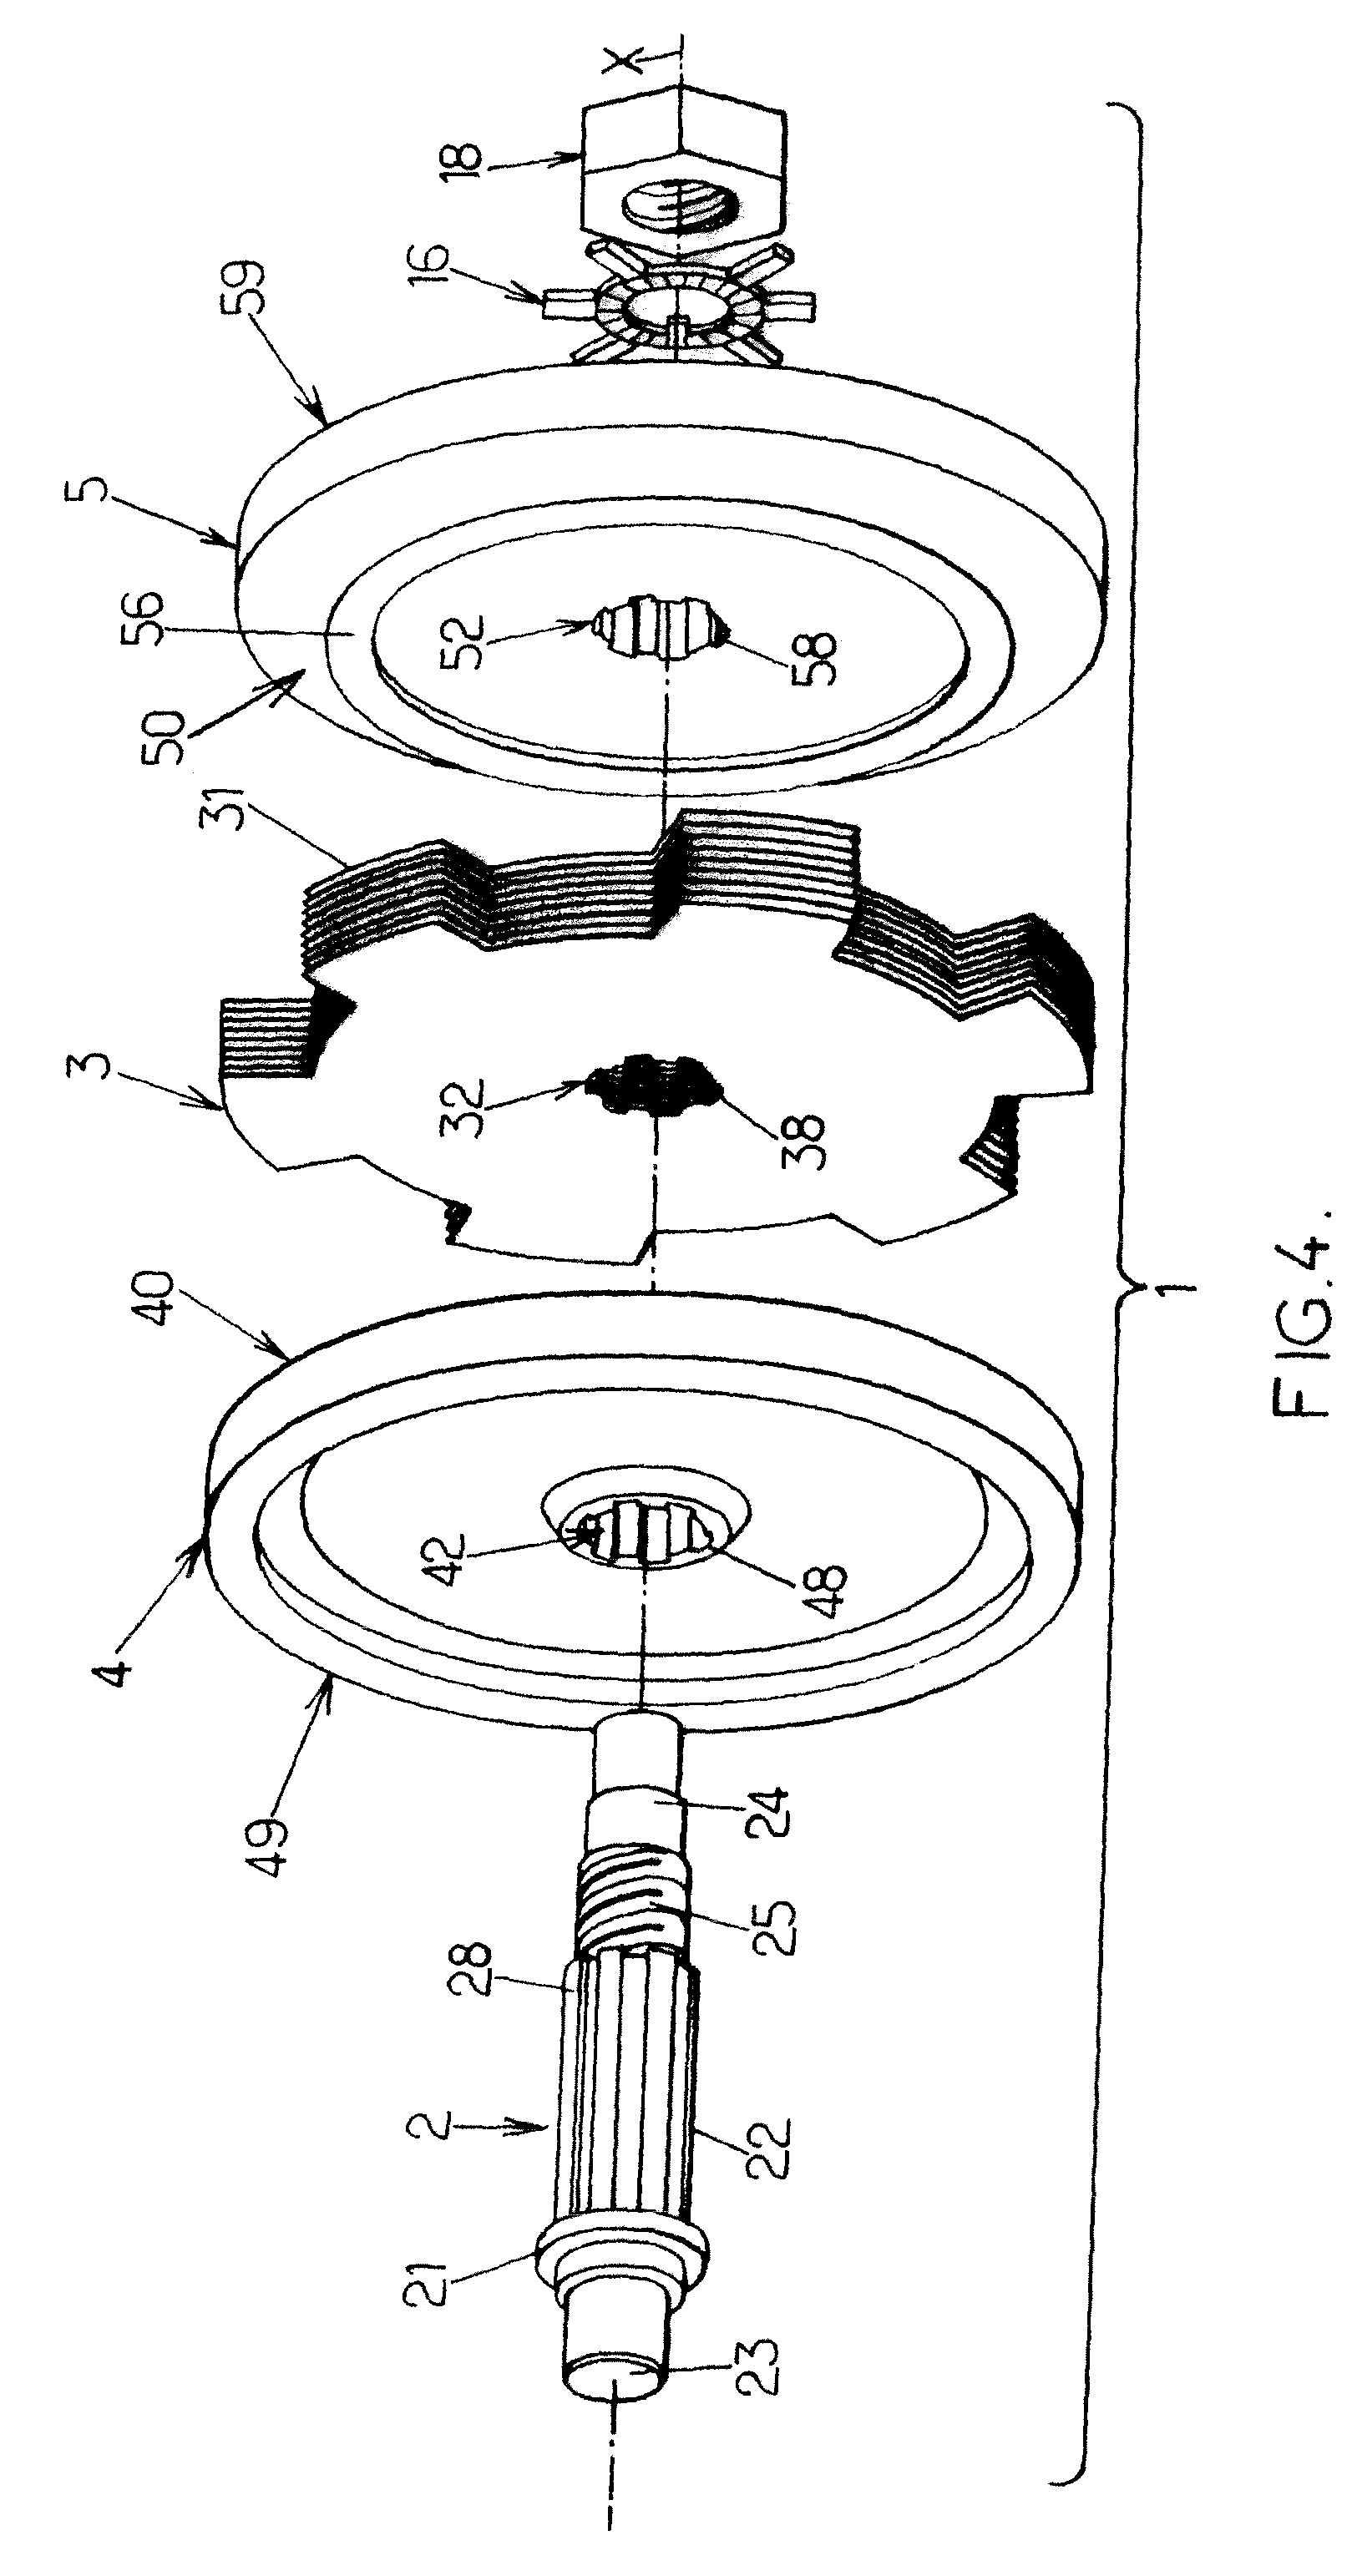 Energy storage device comprising a flywheel